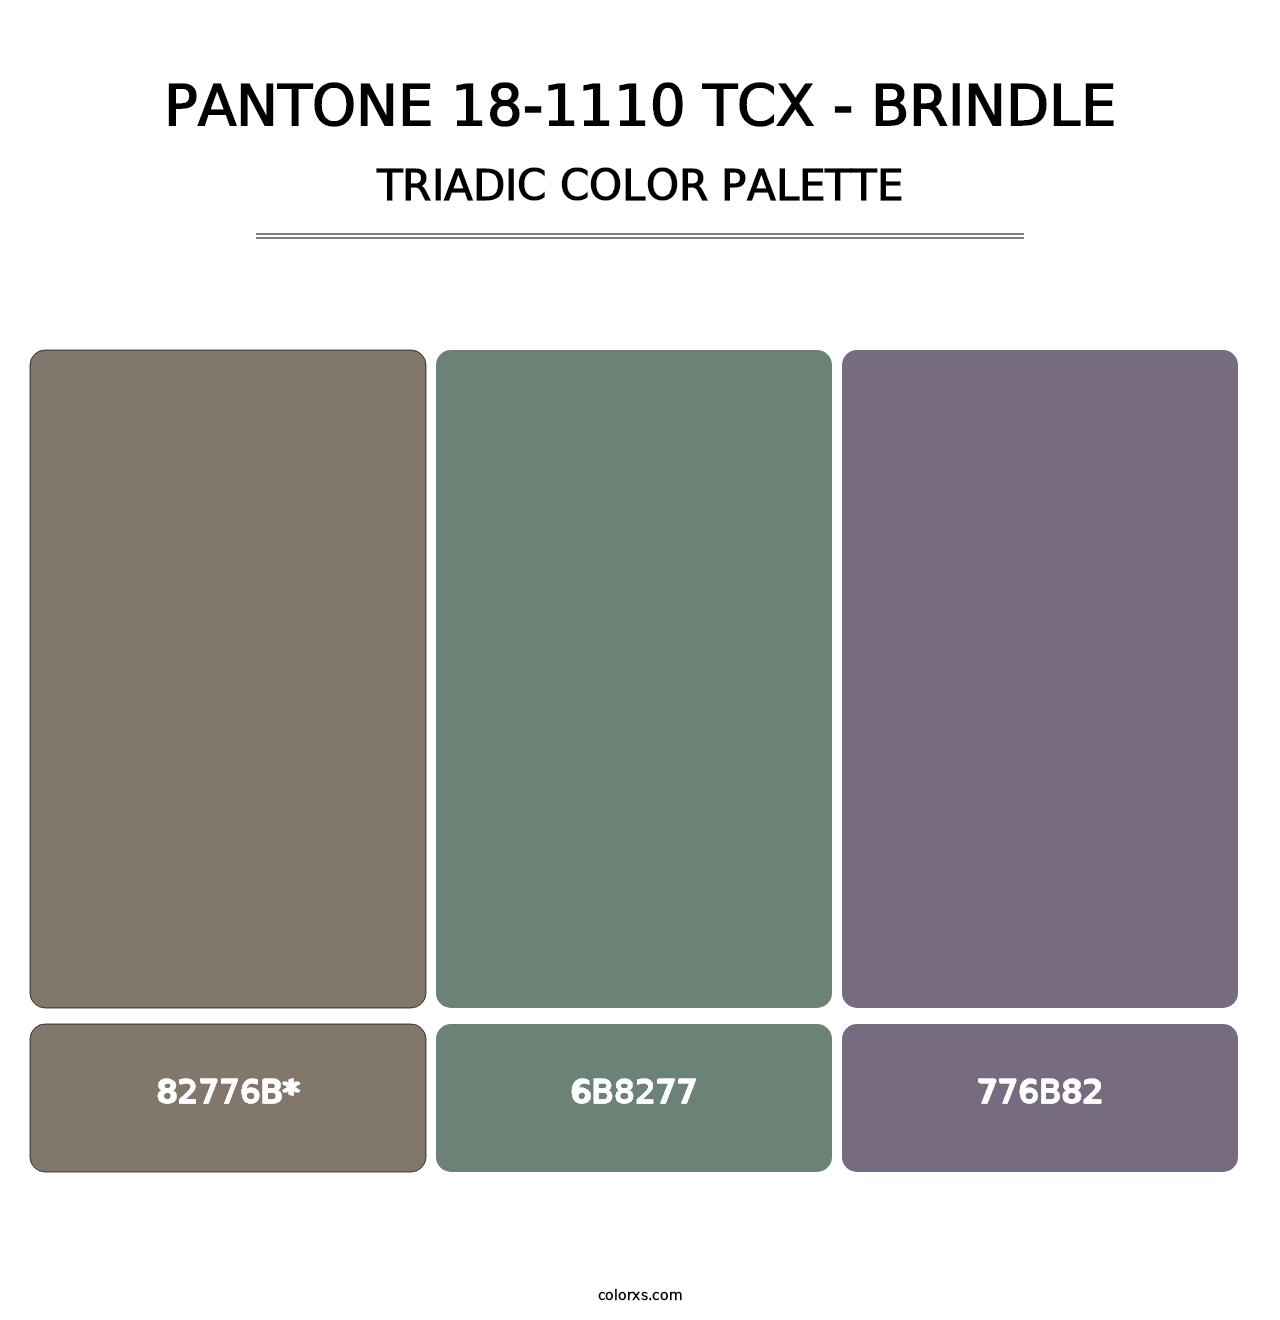 PANTONE 18-1110 TCX - Brindle - Triadic Color Palette